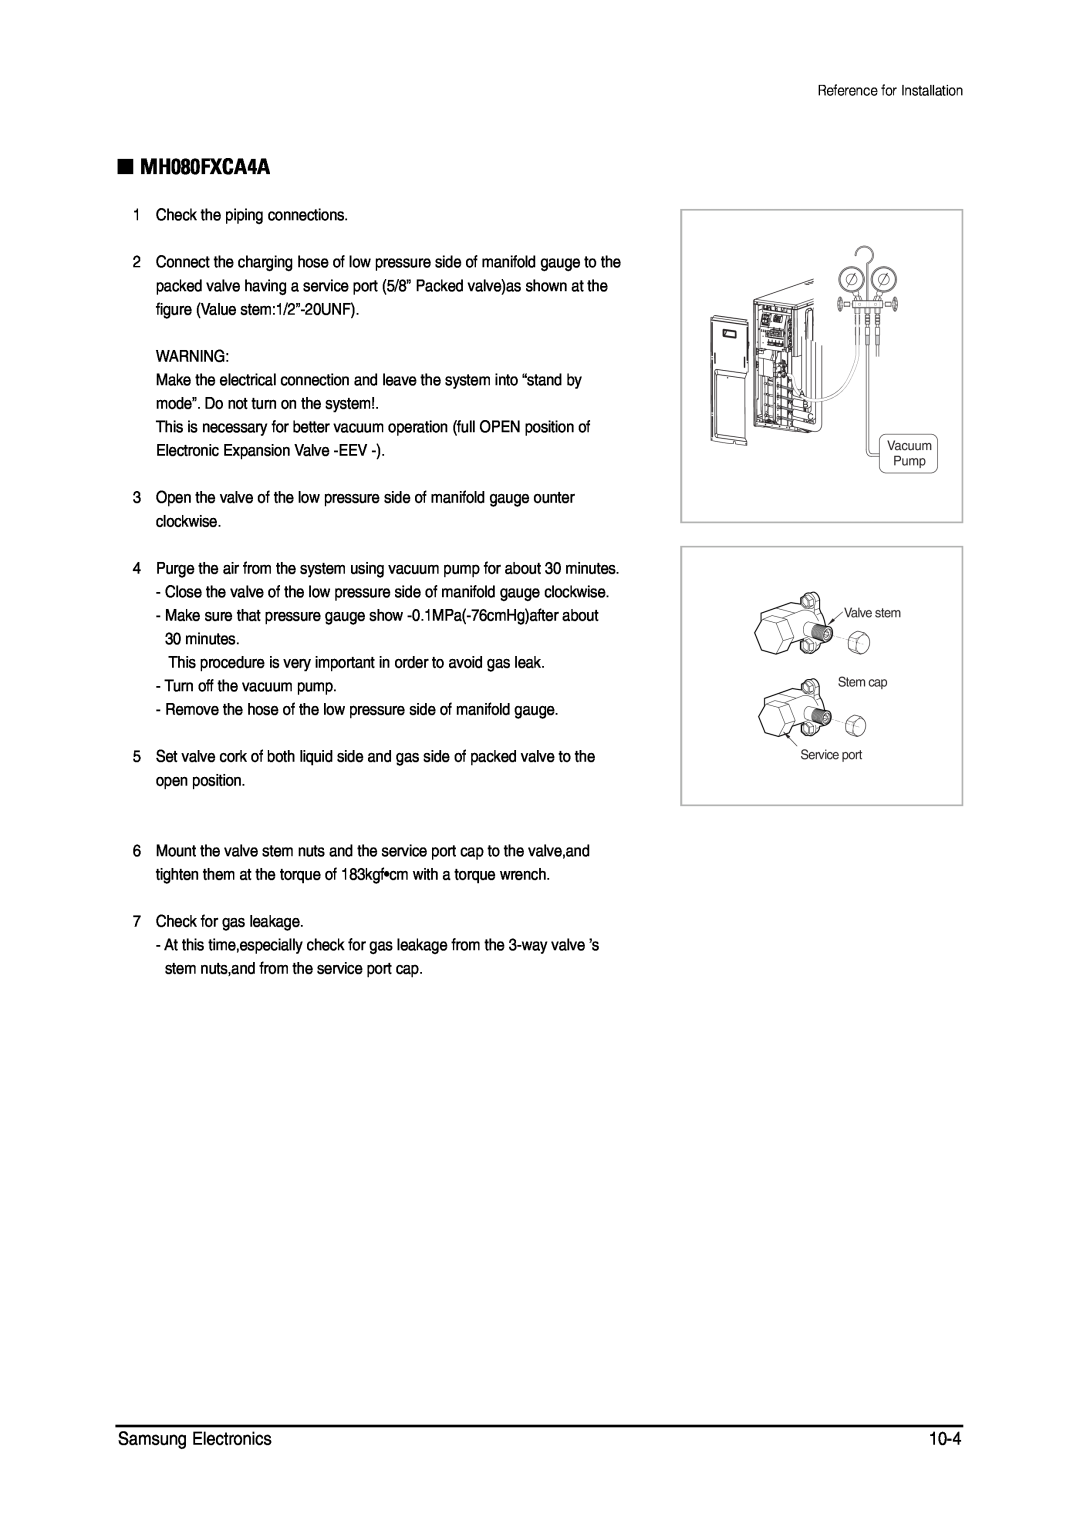 Samsung MH026FNCA service manual MH080FXCA4A, Samsung Electronics, 10-4 